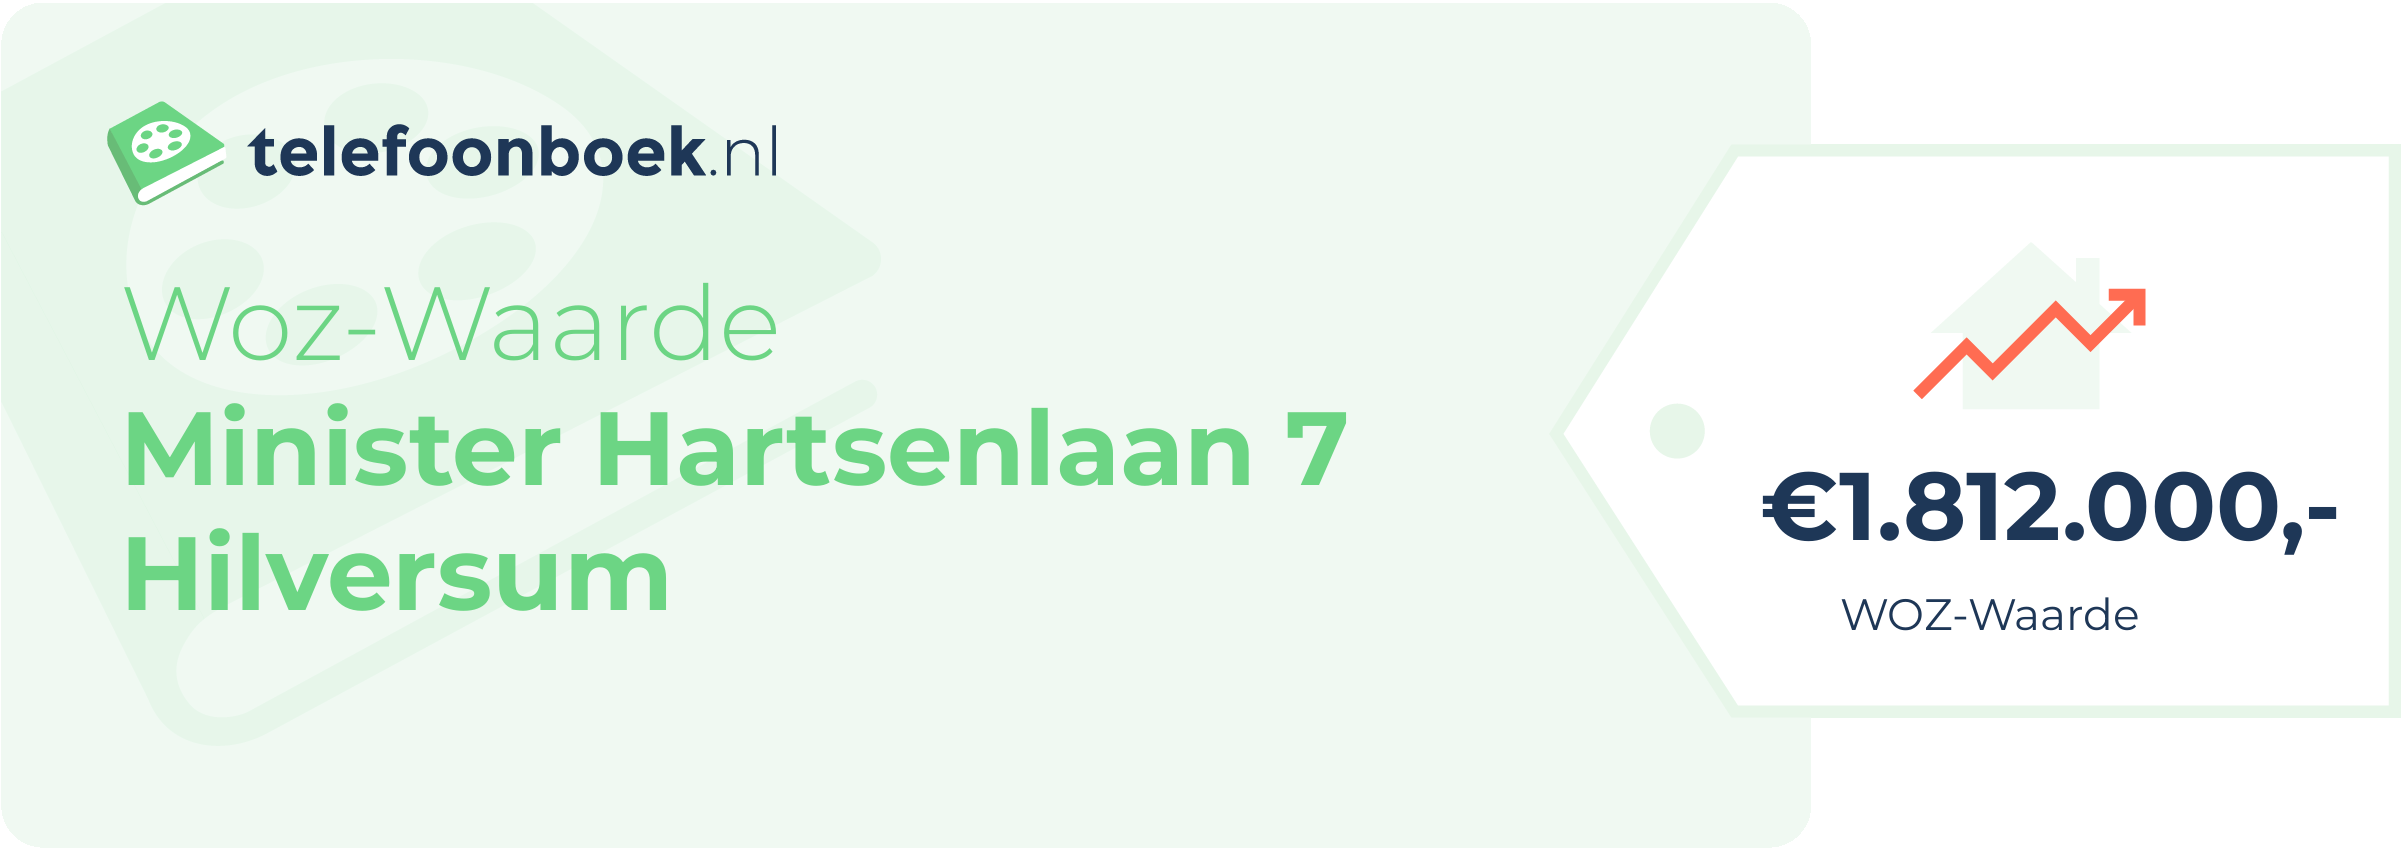 WOZ-waarde Minister Hartsenlaan 7 Hilversum